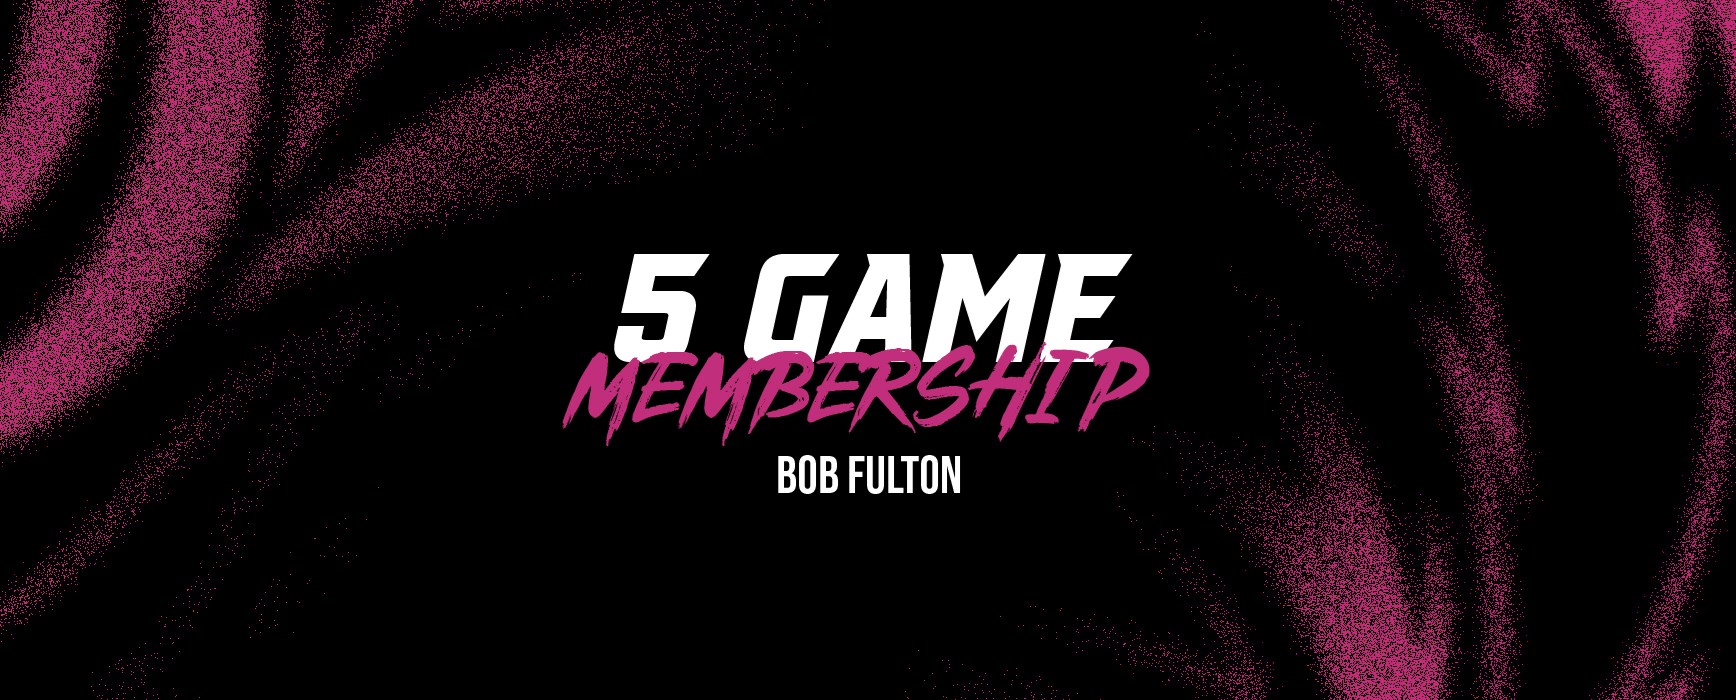 5 Game Bob Fulton